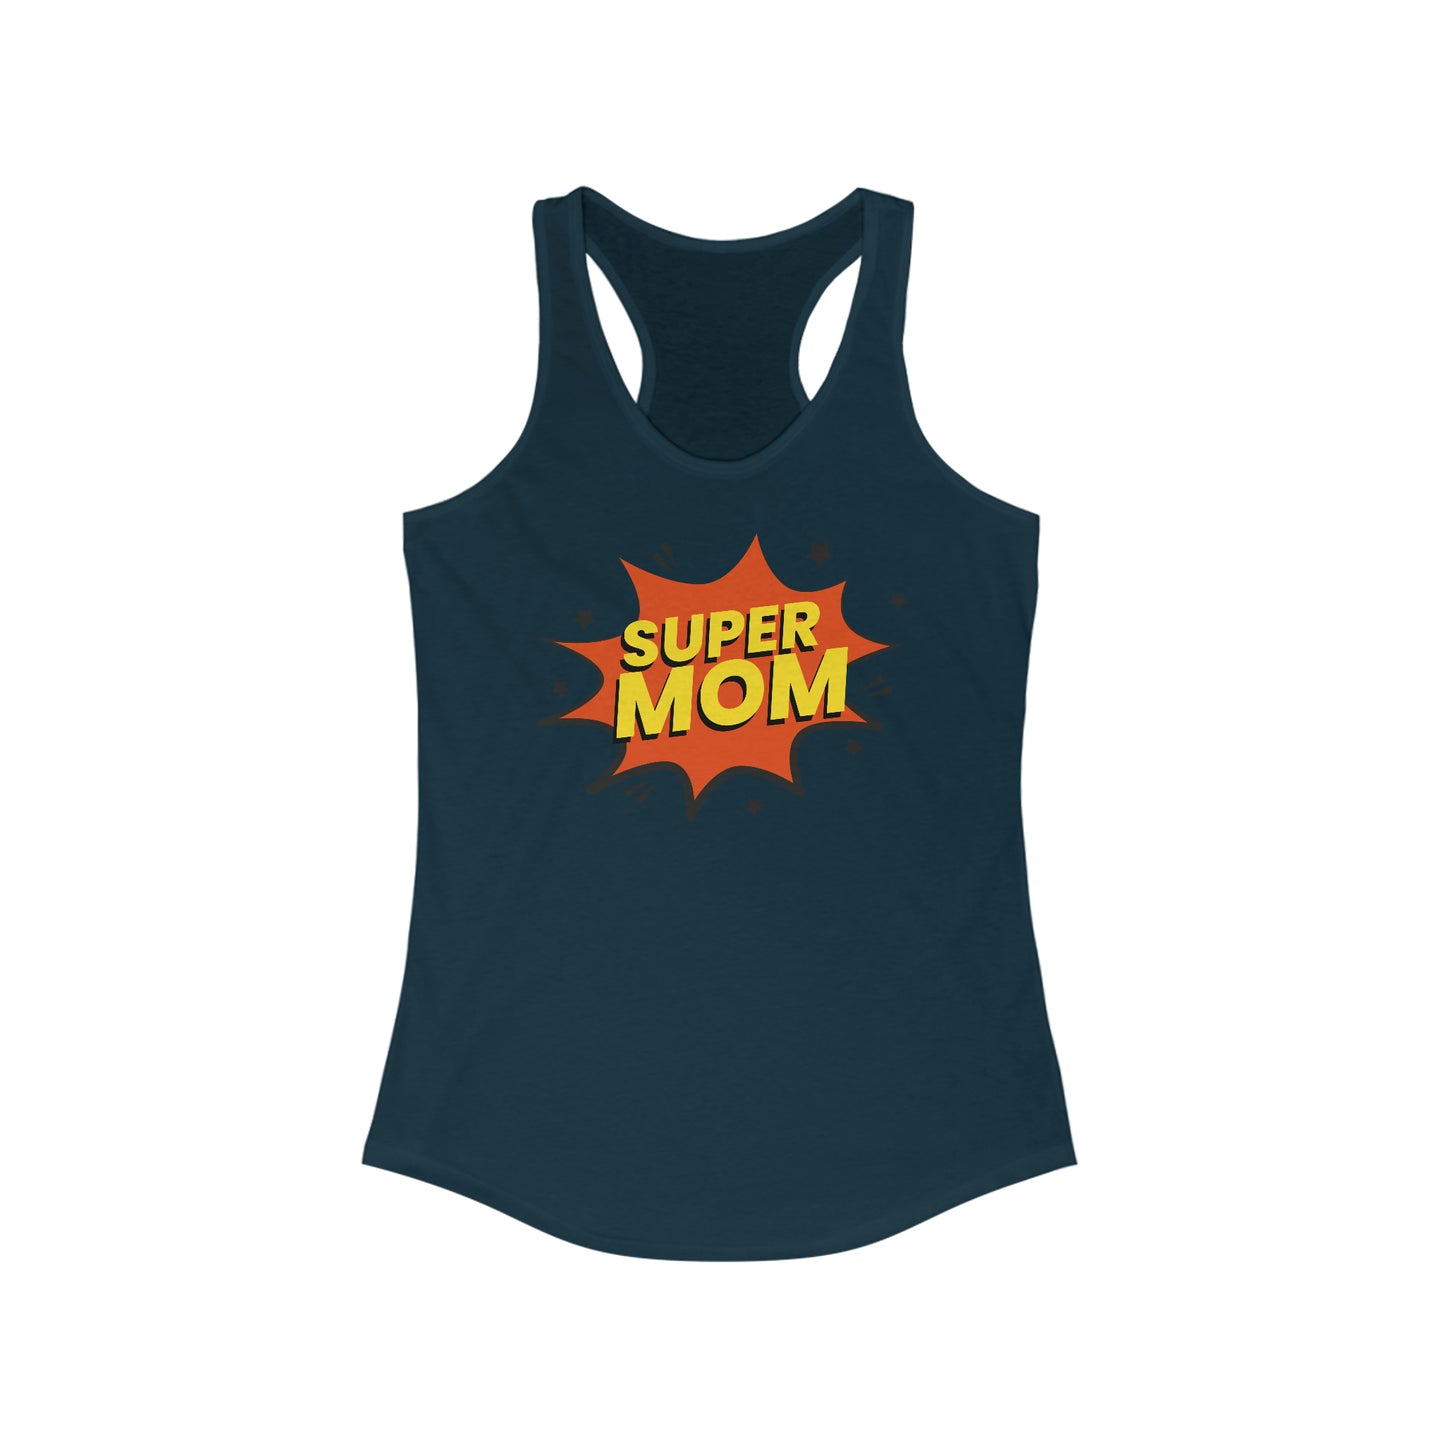 Super Mom Women's Ideal Racerback Tank